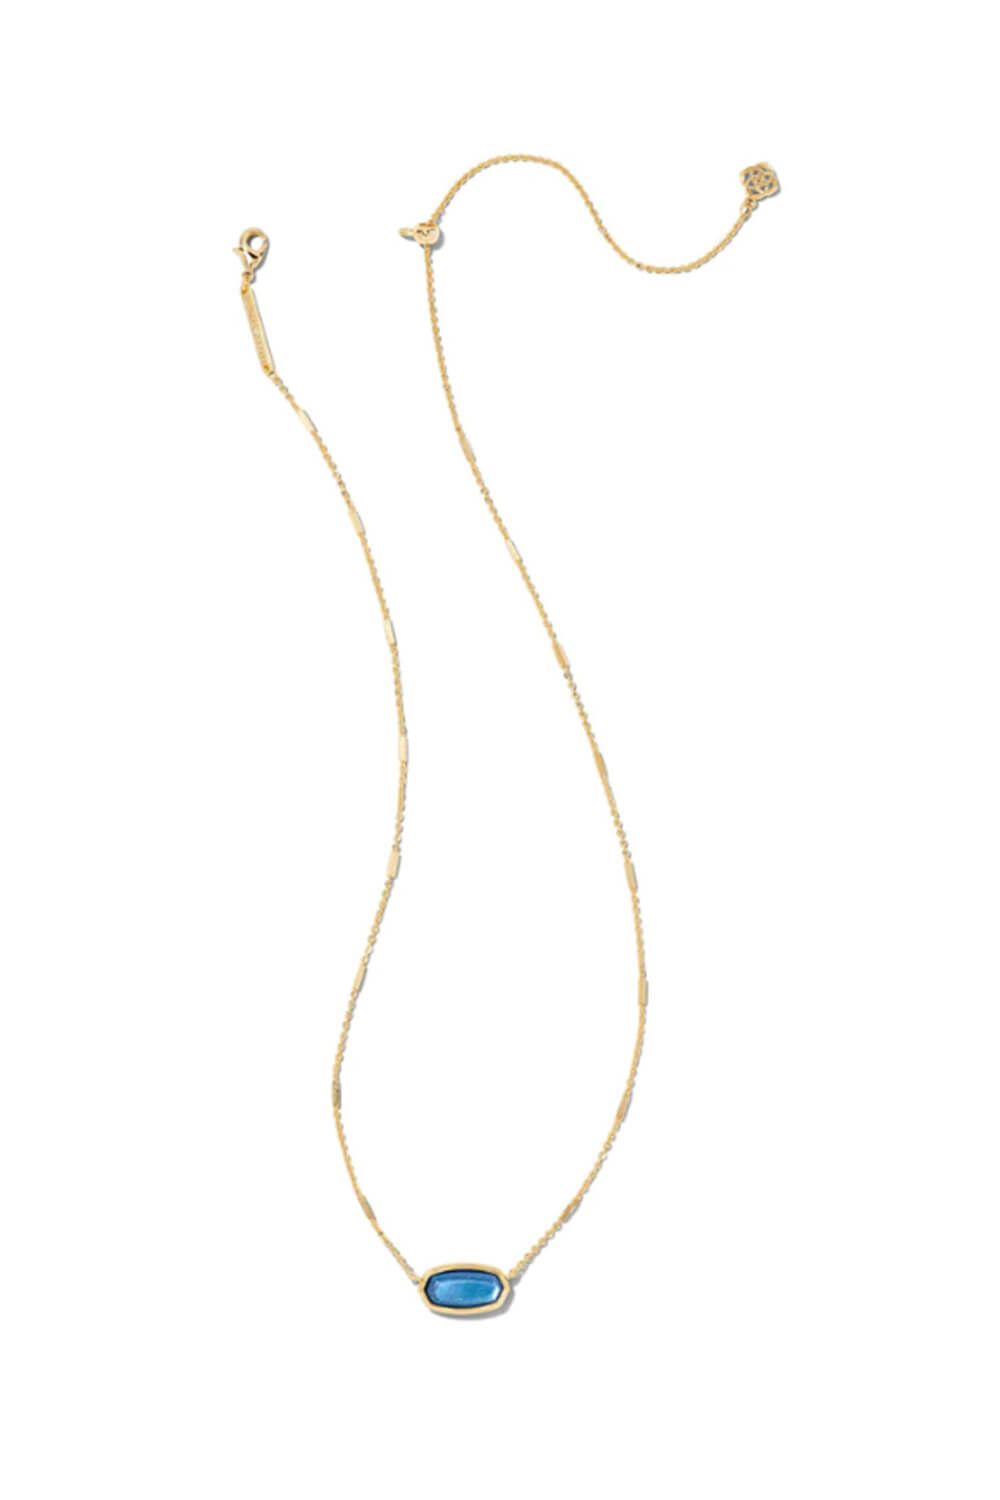 Kendra Scott | Jewelry | New Kendra Scott Gold Multicolor Drusy Elisa Pendant  Necklace | Poshmark